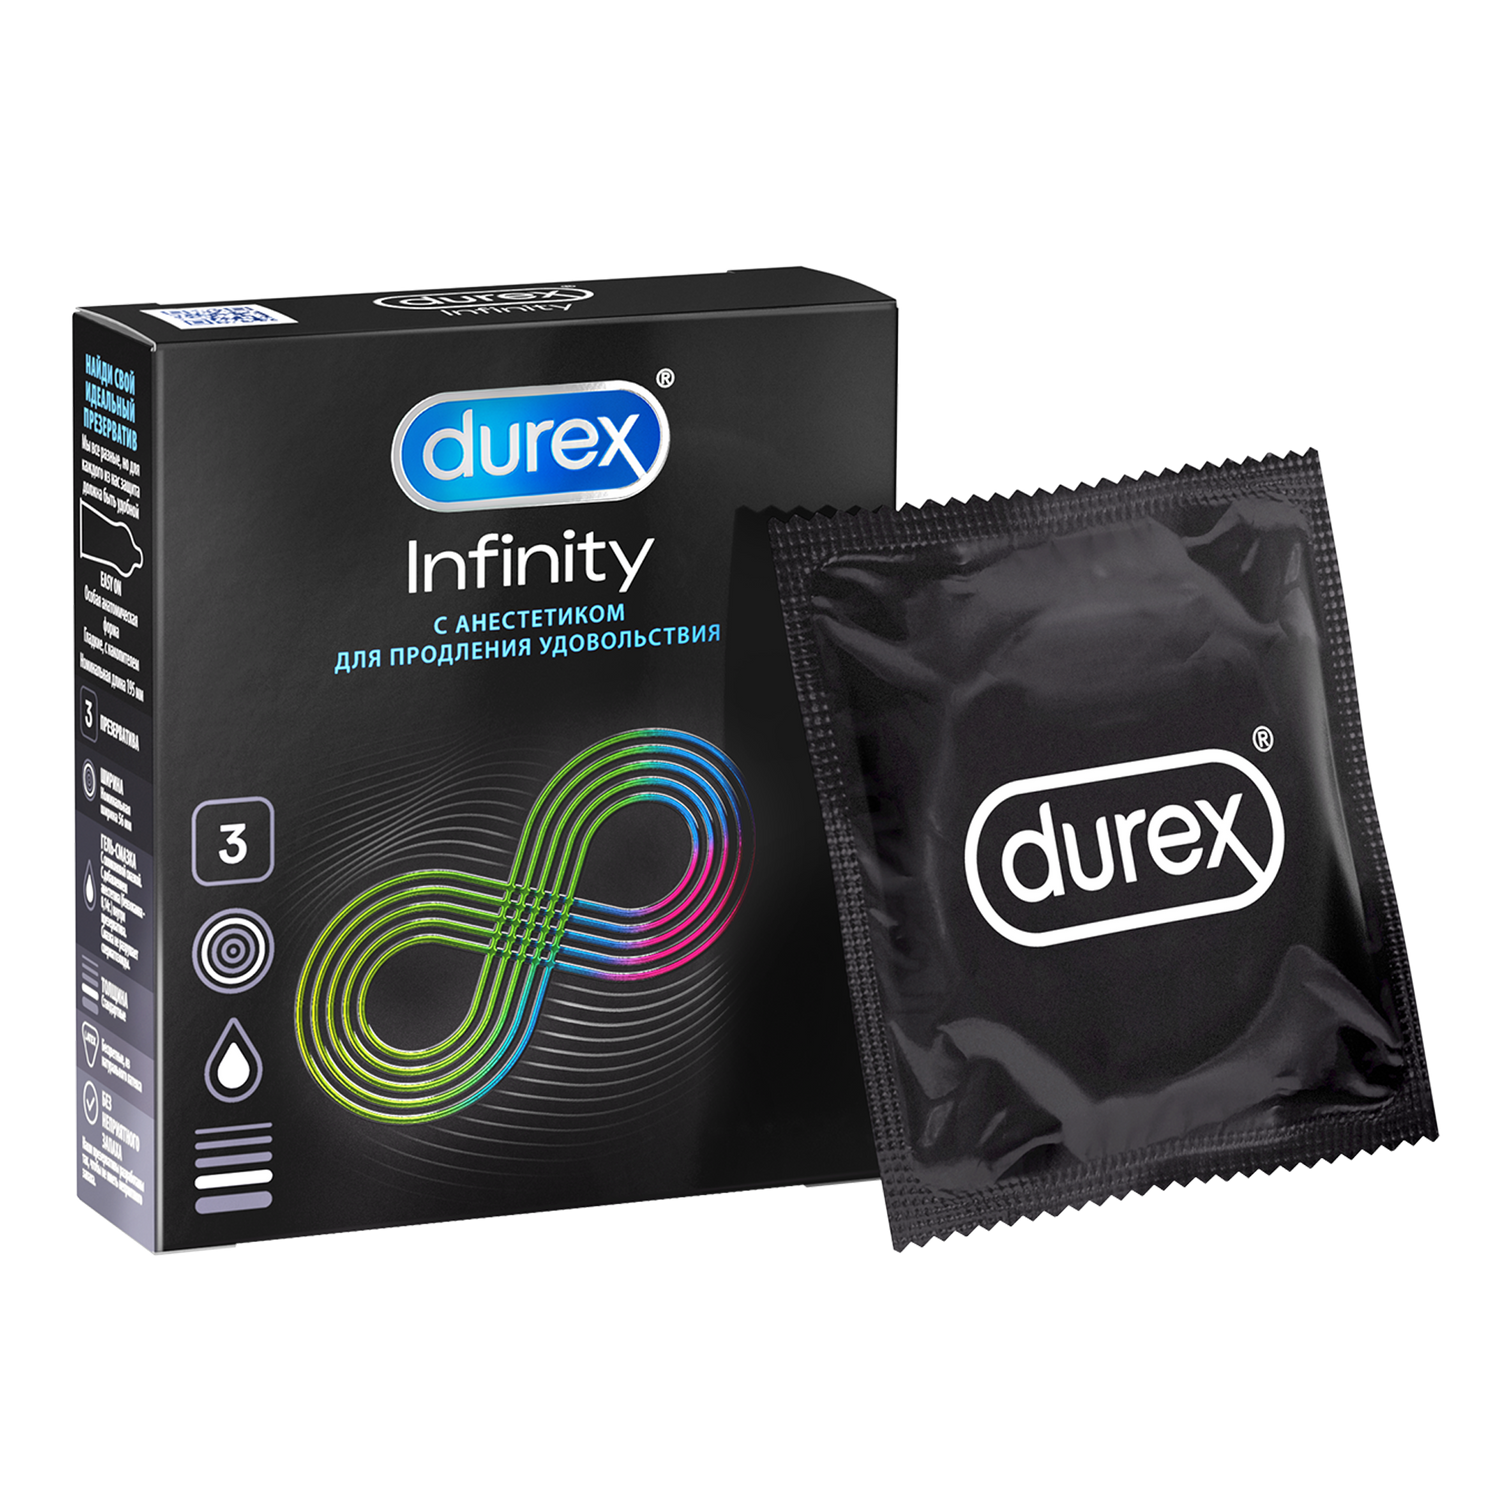 Презервативы Durex Infinity с анестетиком гладкие, 3 шт. sico презервативы пролонгирующие с анестетиком 12